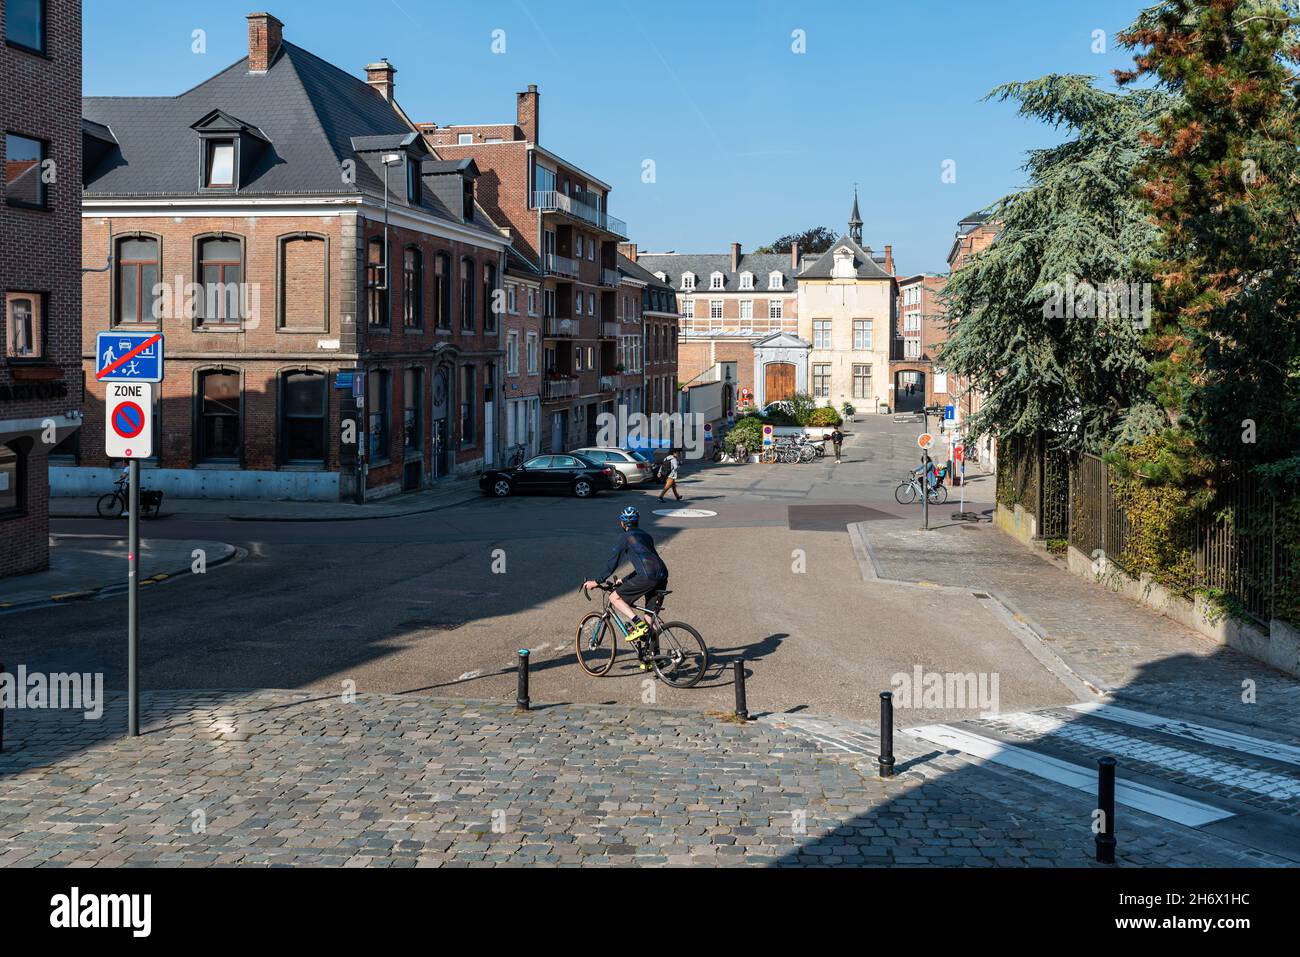 Leuven, Flemish Brabant Region, Belgium - 09 22 2021: The Saint Anthony hill and square Stock Photo